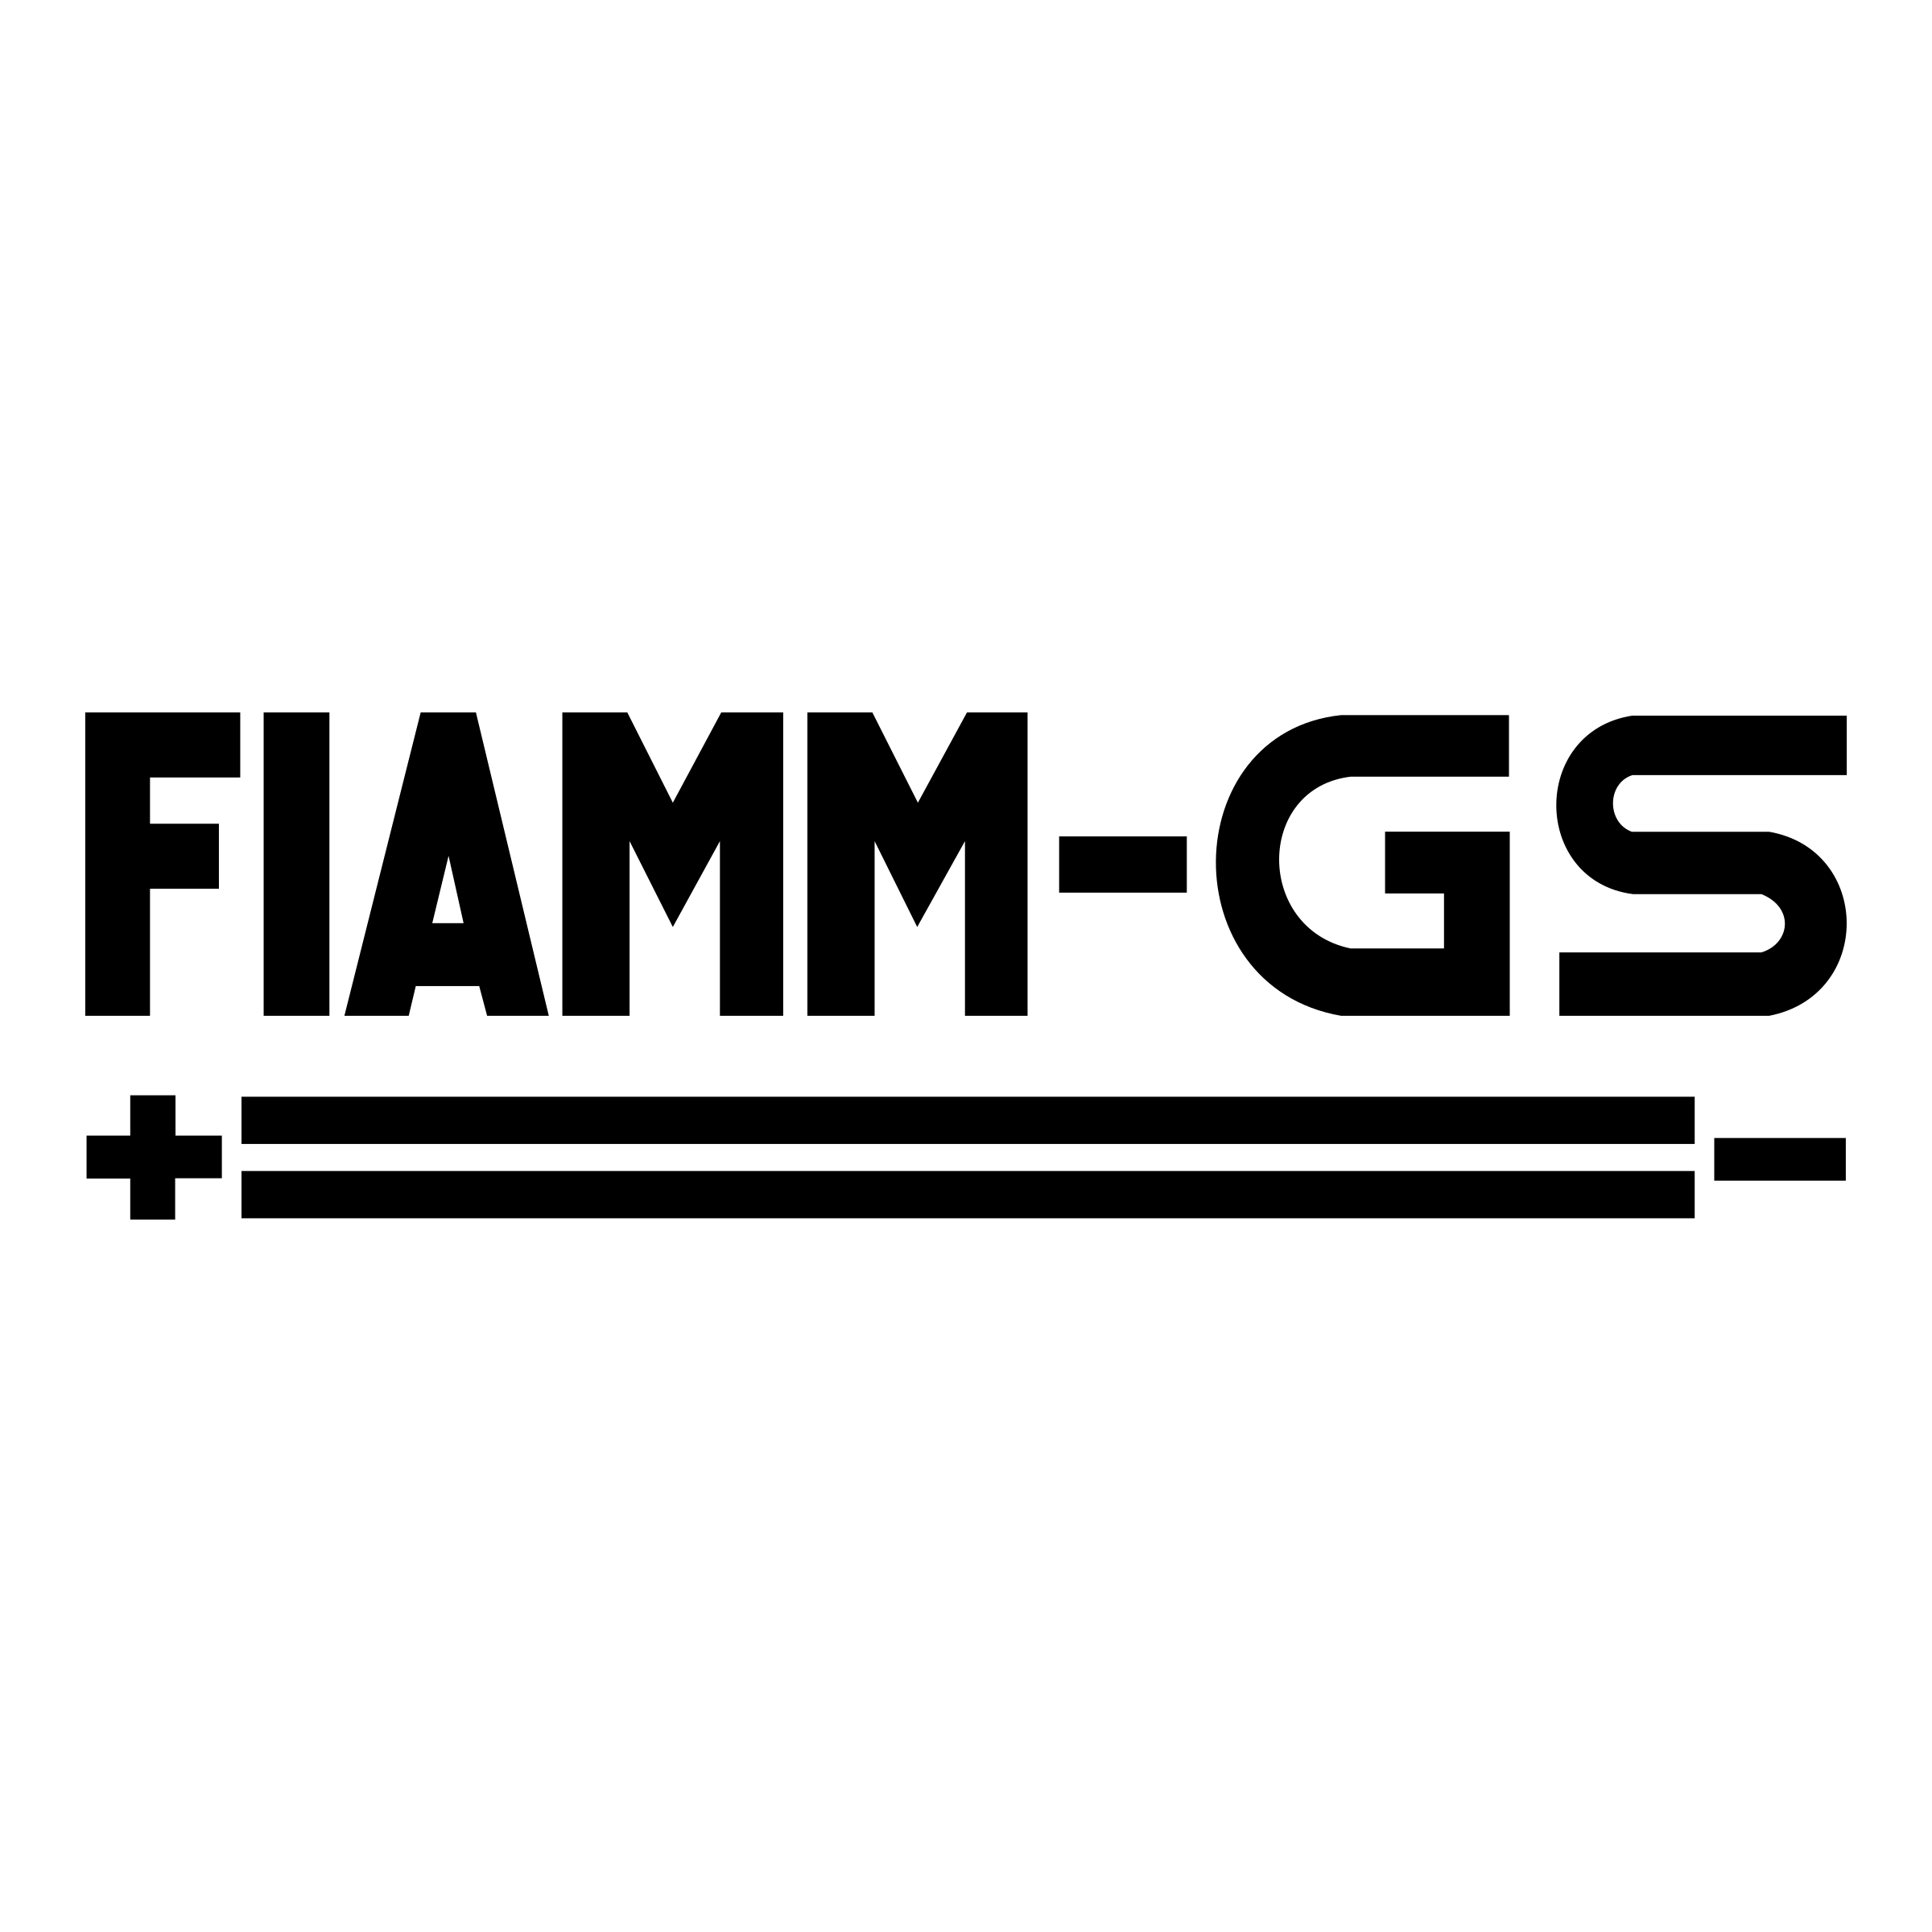 White G S Logo - Fiamm GS Logo PNG Transparent & SVG Vector - Freebie Supply